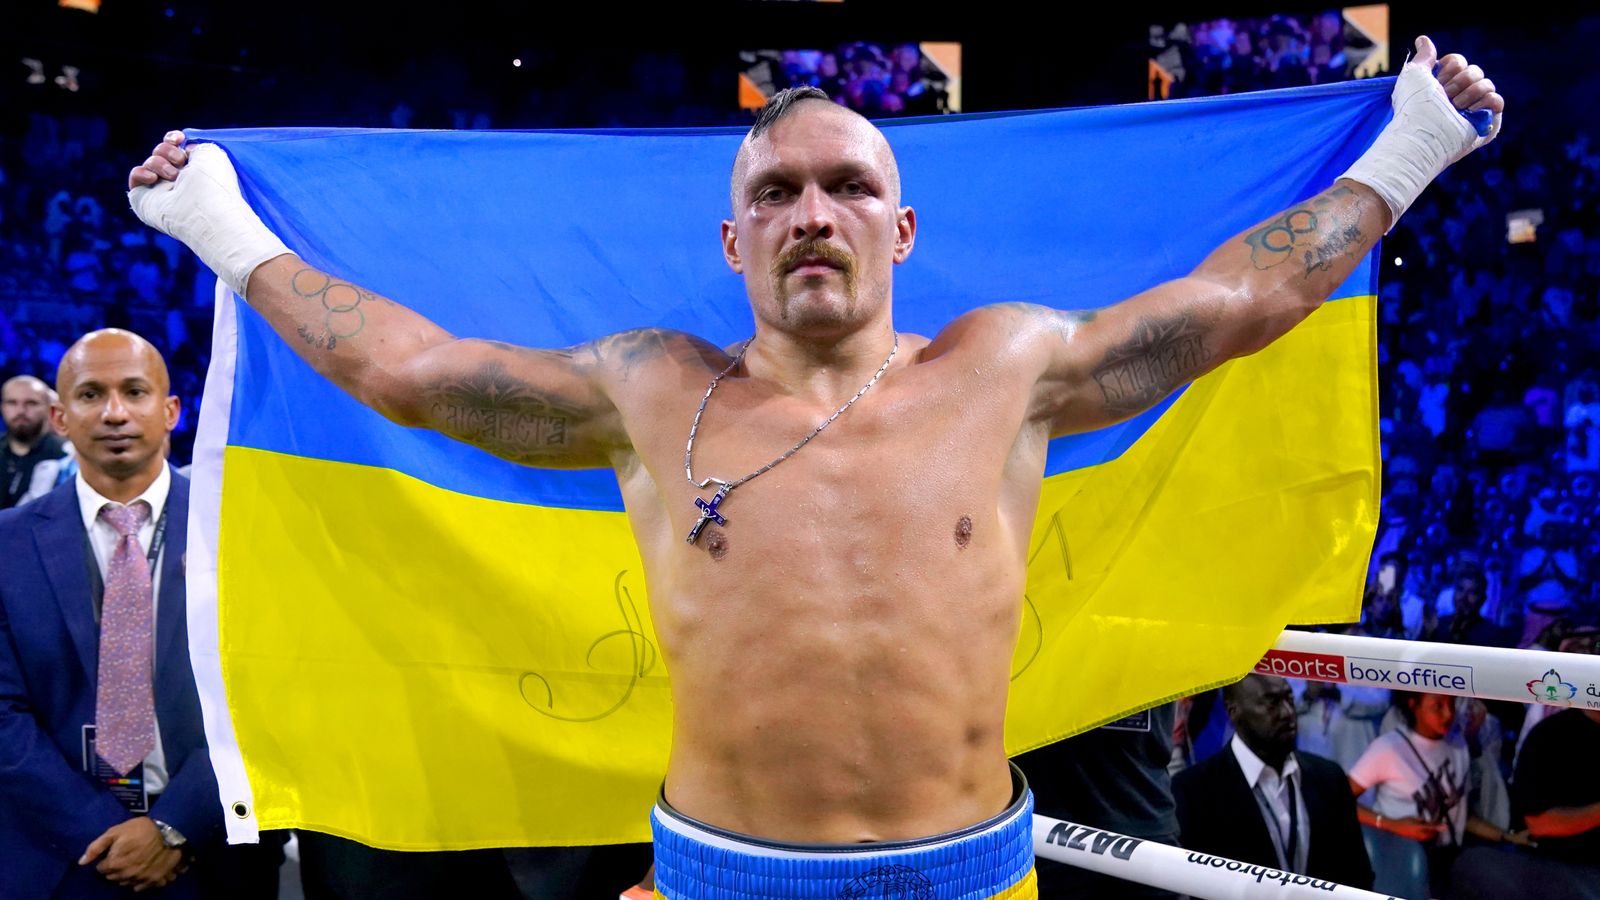 Ukrainian Oleksandr Usyk defeats Anthony Joshua in heavyweight rematch after split points decision in Saudi Arabia |  UK News